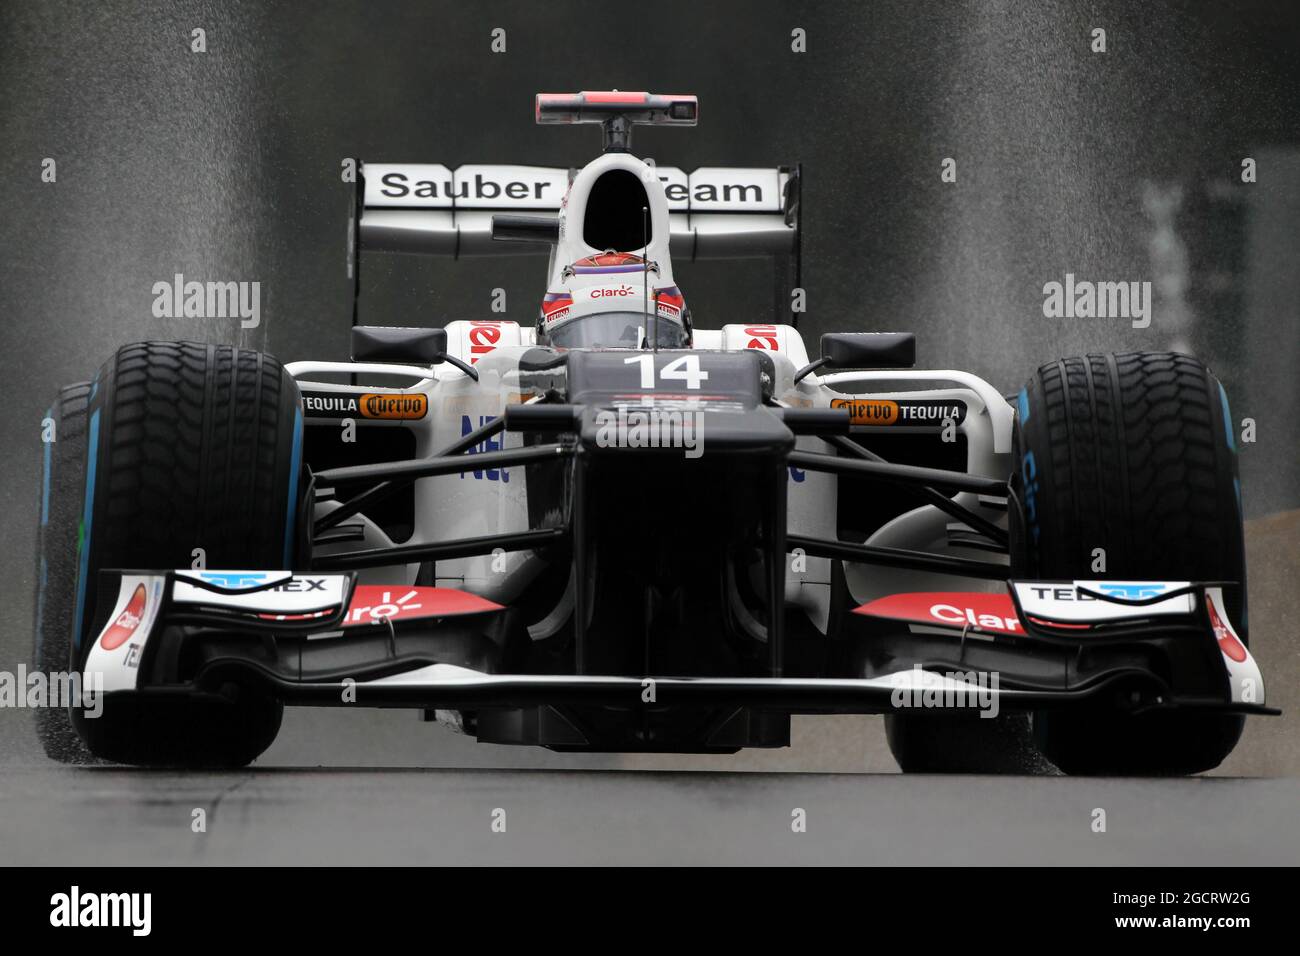 Kamui Kobayashi (JPN) Sauber C31. Grand Prix de Belgique, vendredi 31 août 2012. Spa-Francorchamps, Belgique. Banque D'Images